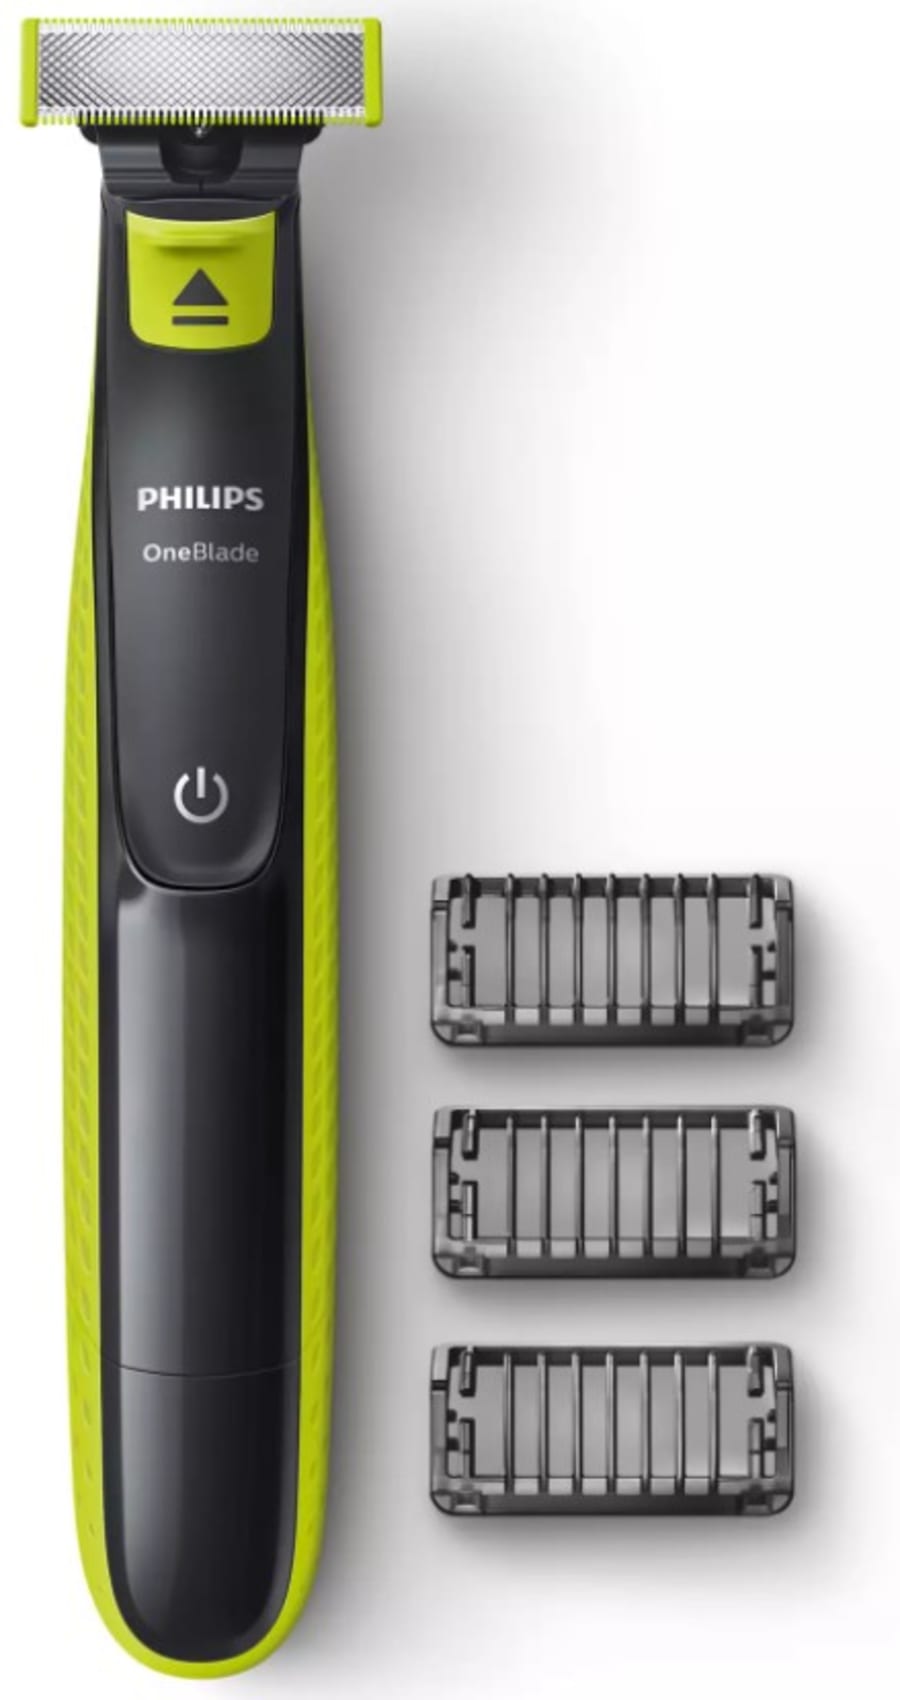 Philips OneBlade rakvél